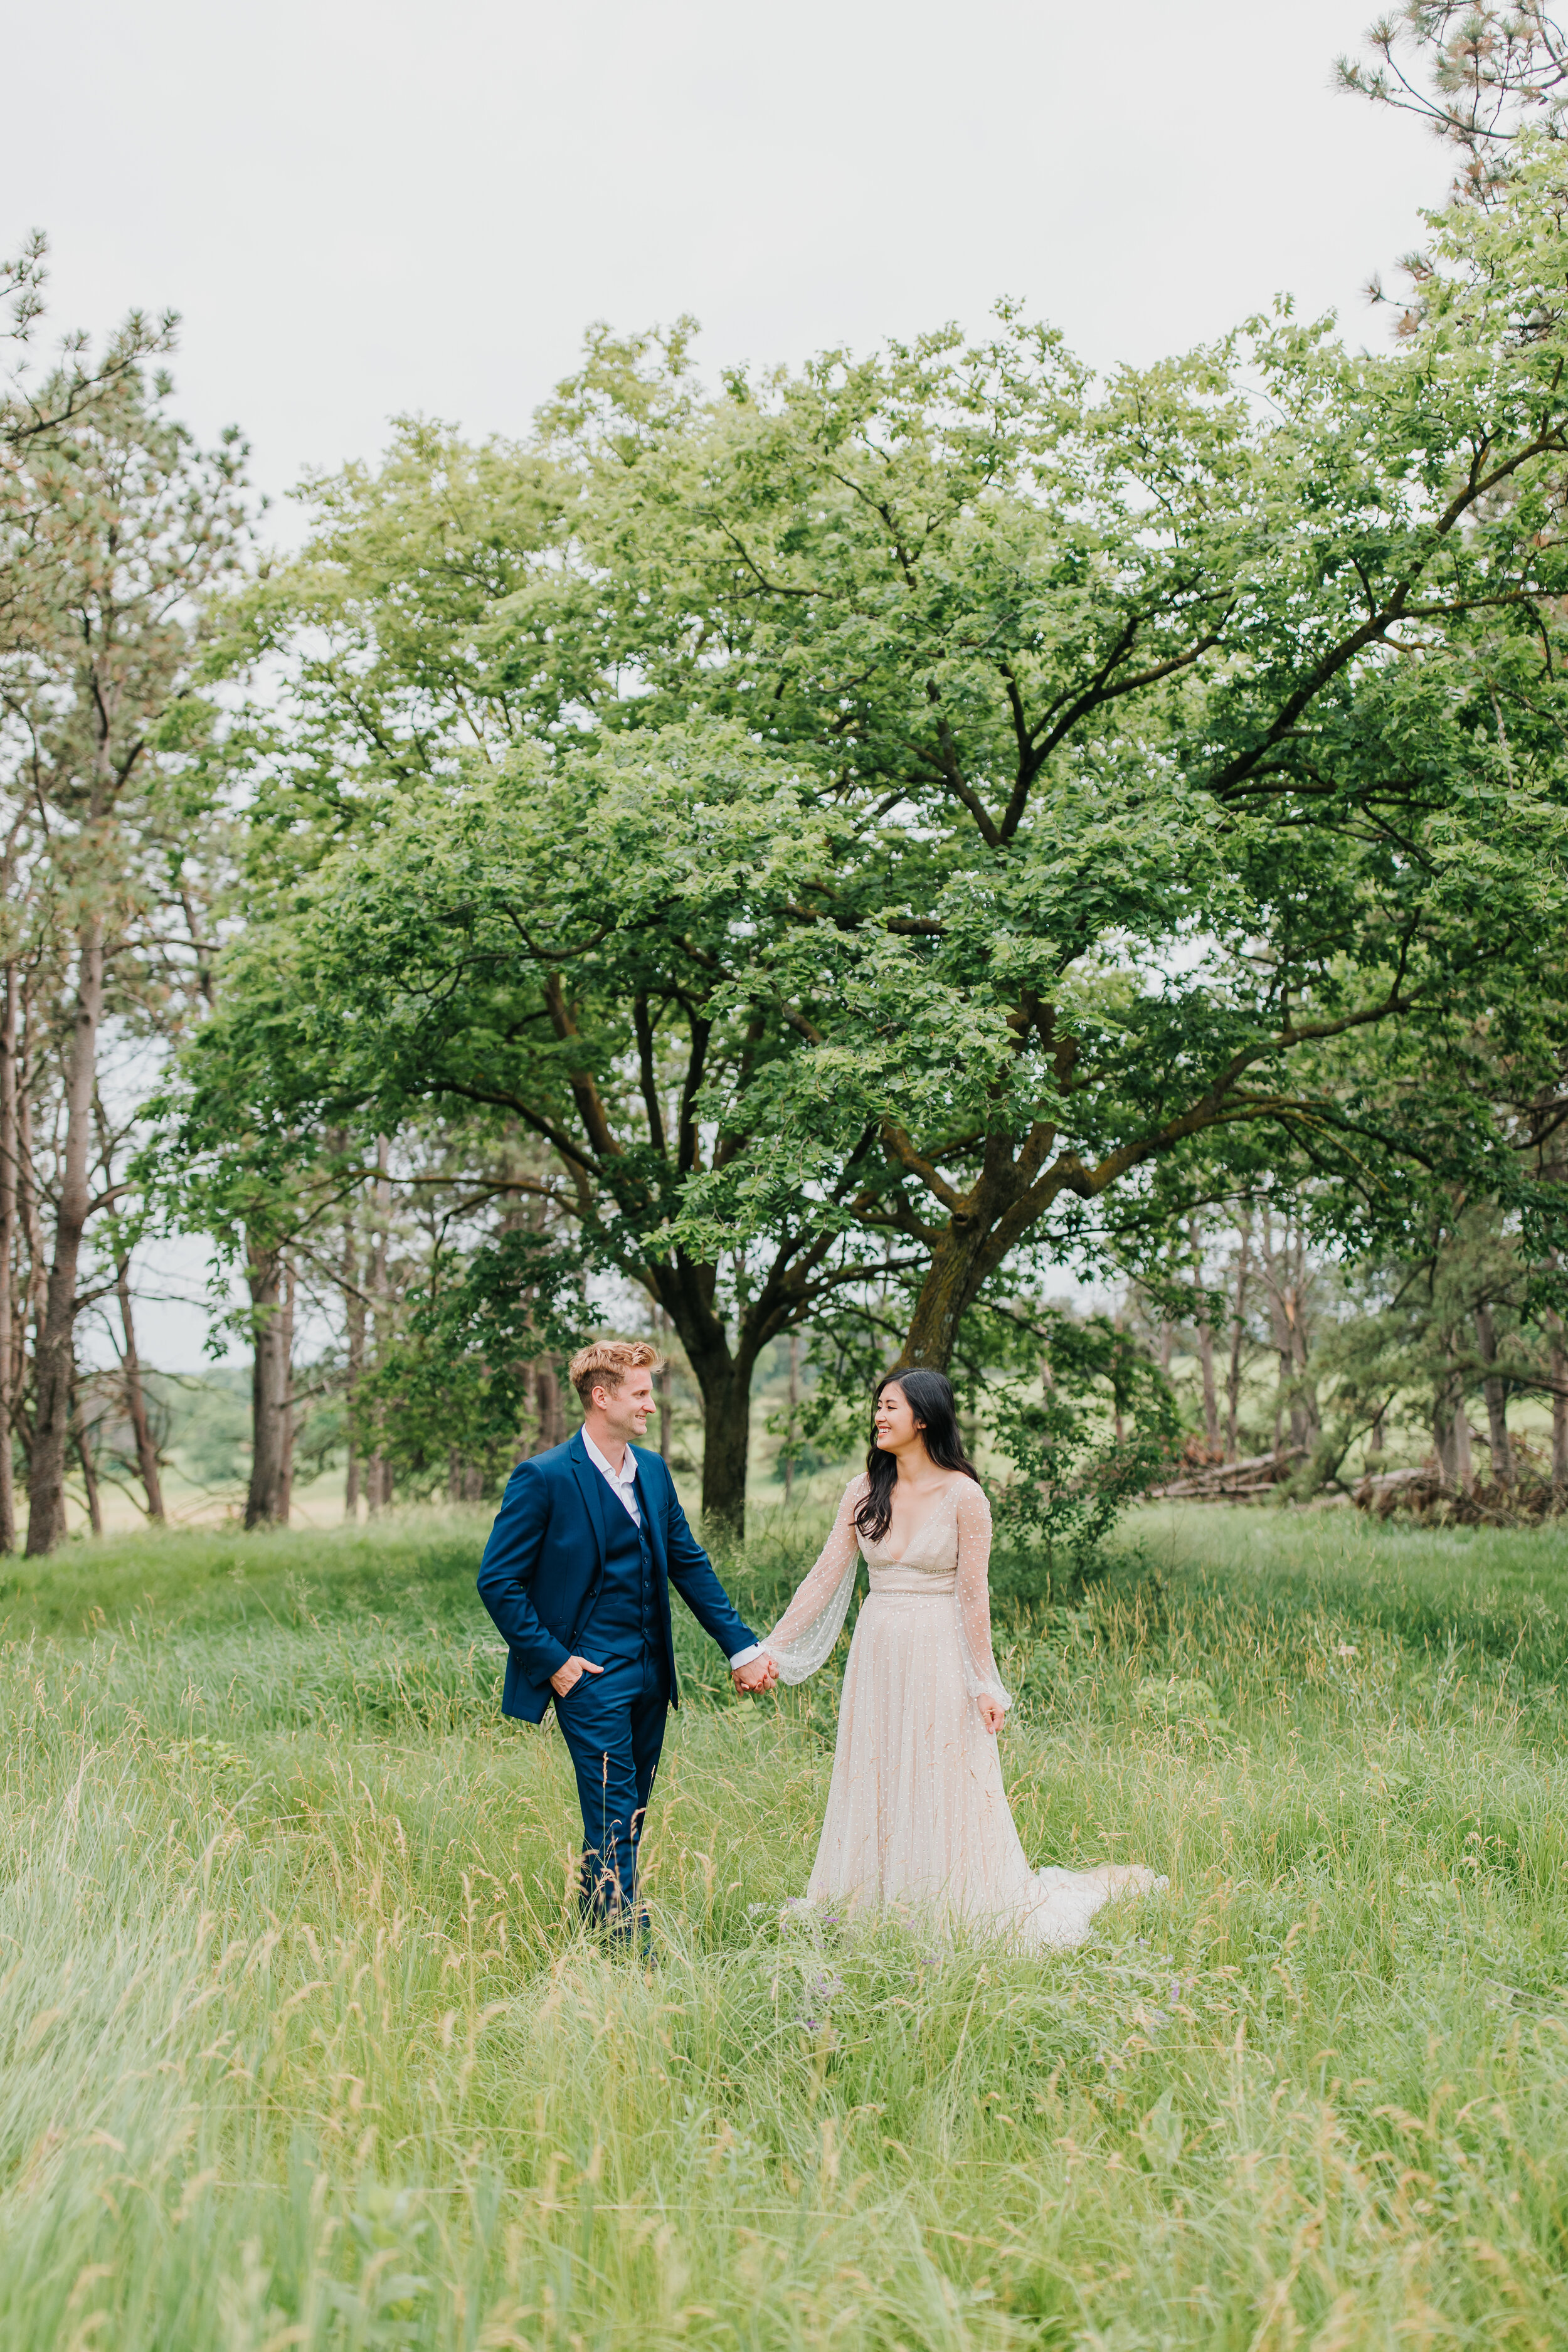 Wendy & Matt - Engaged - Nathaniel Jensen Photography - Omaha Nebraska Wedding Photographer-14.jpg